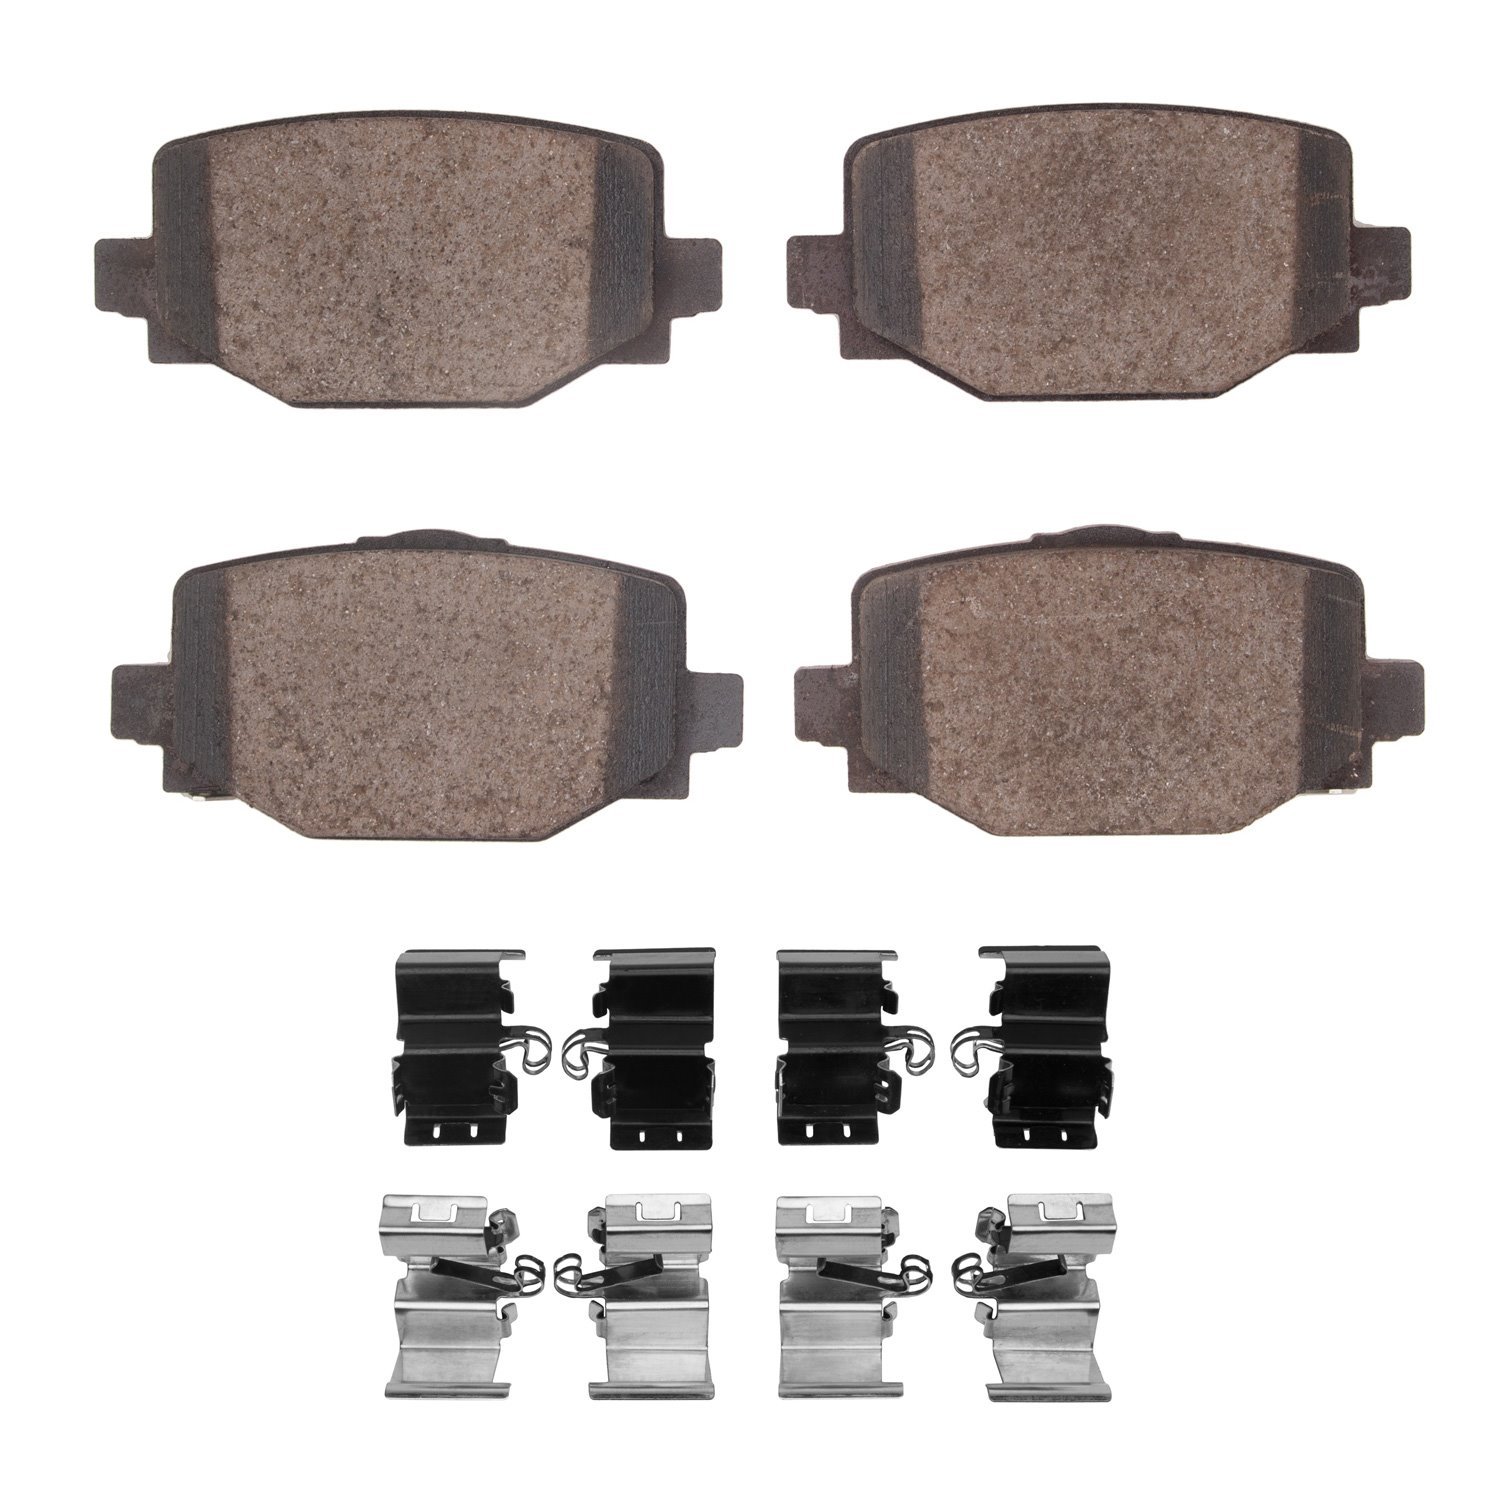 1551-2191-01 5000 Advanced Ceramic Brake Pads & Hardware Kit, Fits Select Infiniti/Nissan, Position: Rear